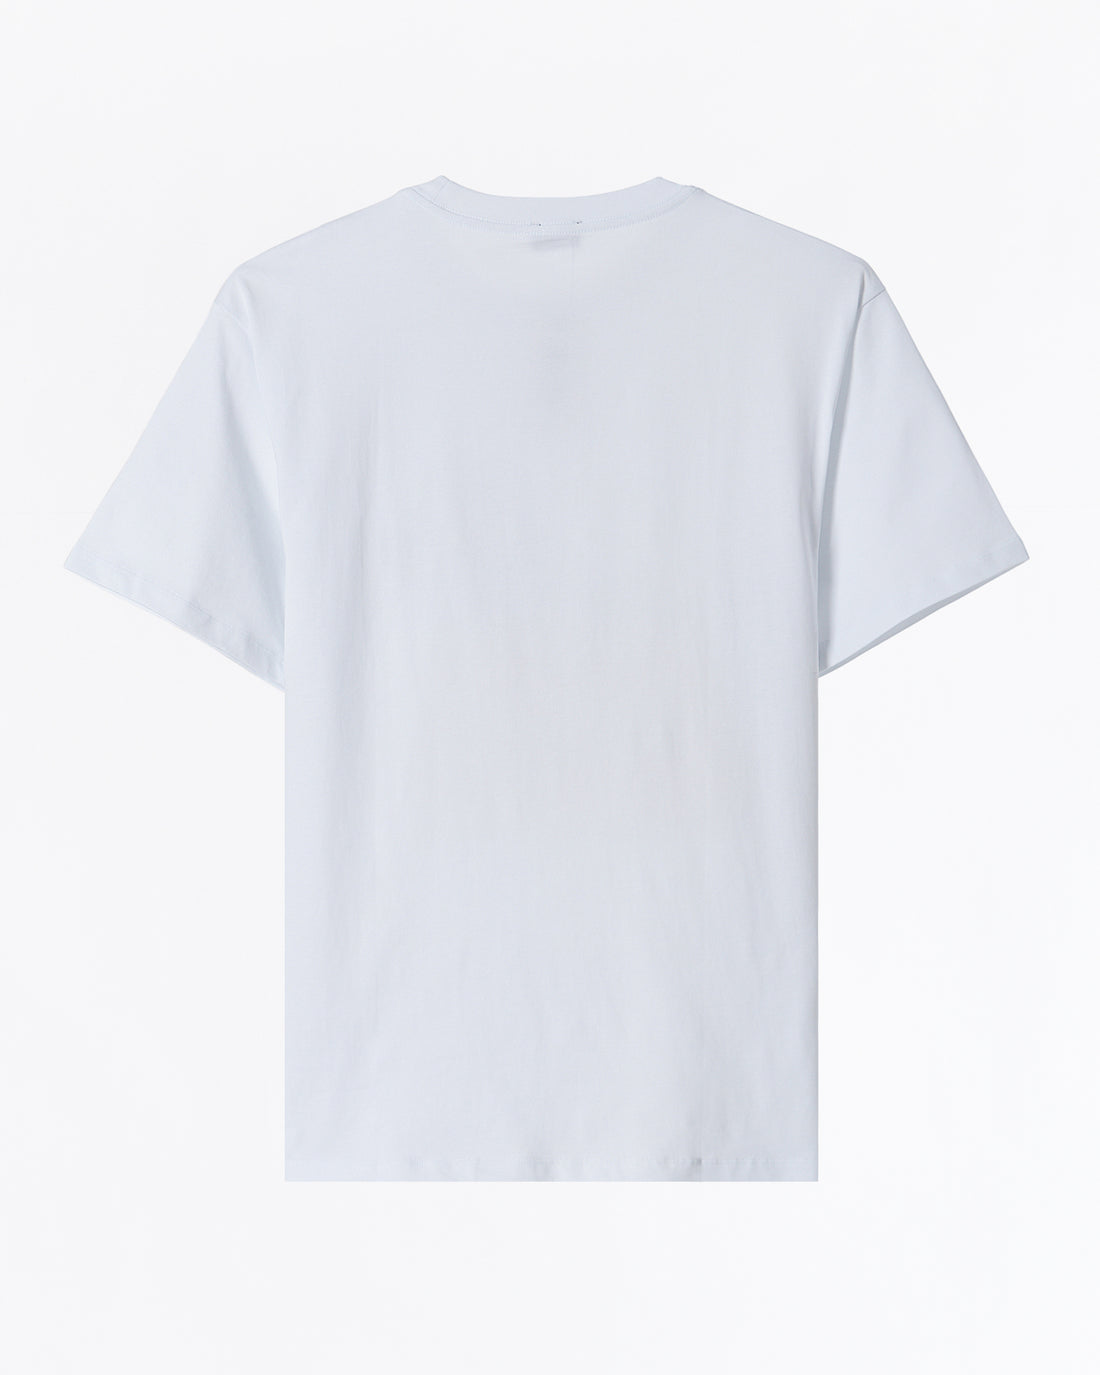 FEN Teddy Bear With Book  Unisex White T-Shirt 21.50